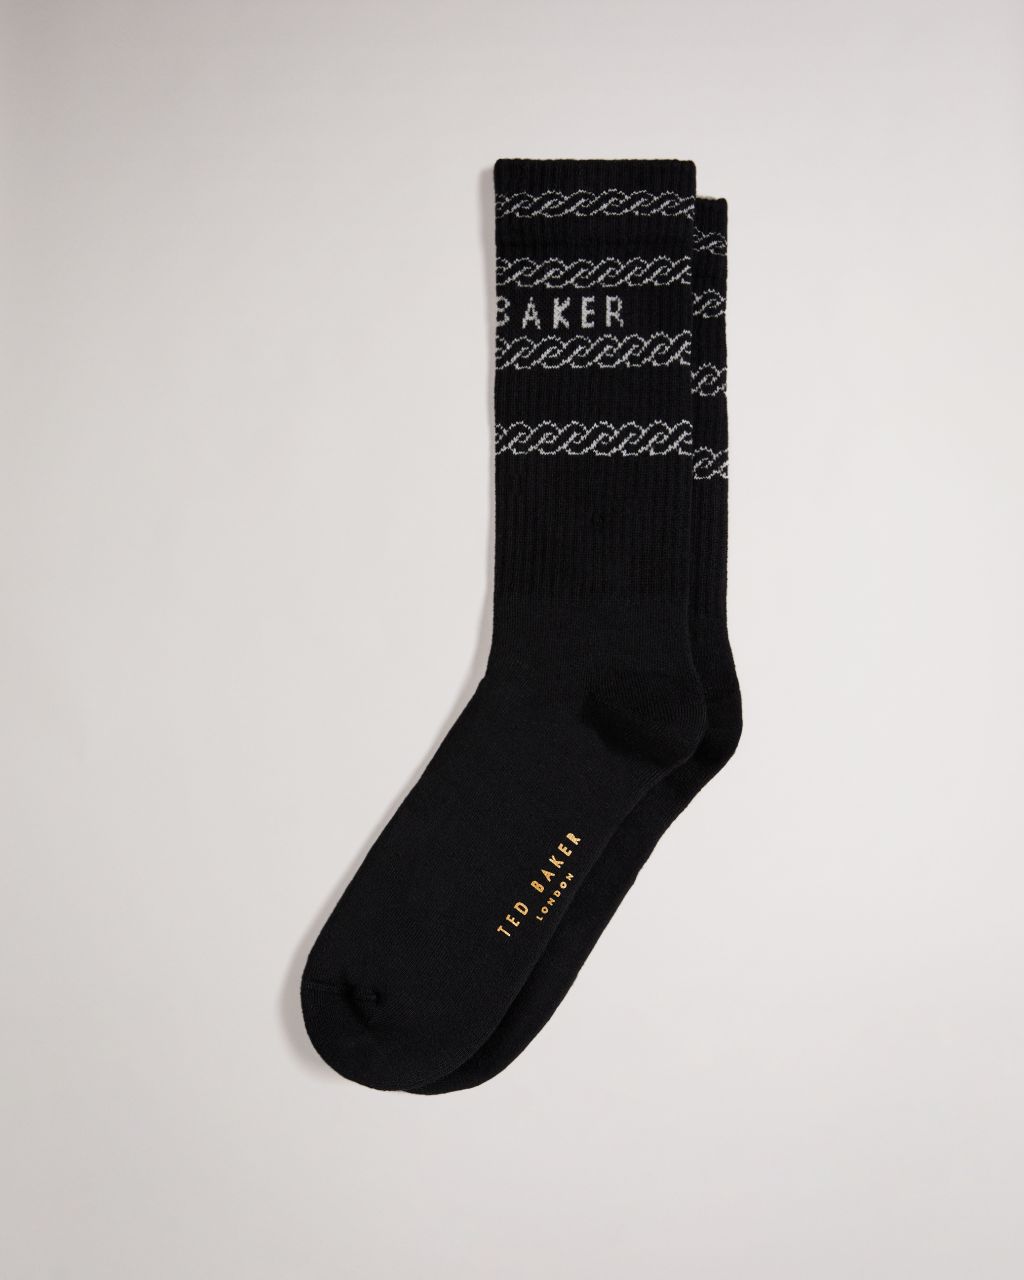 Men's Branded Chain Socks in Black, Chains